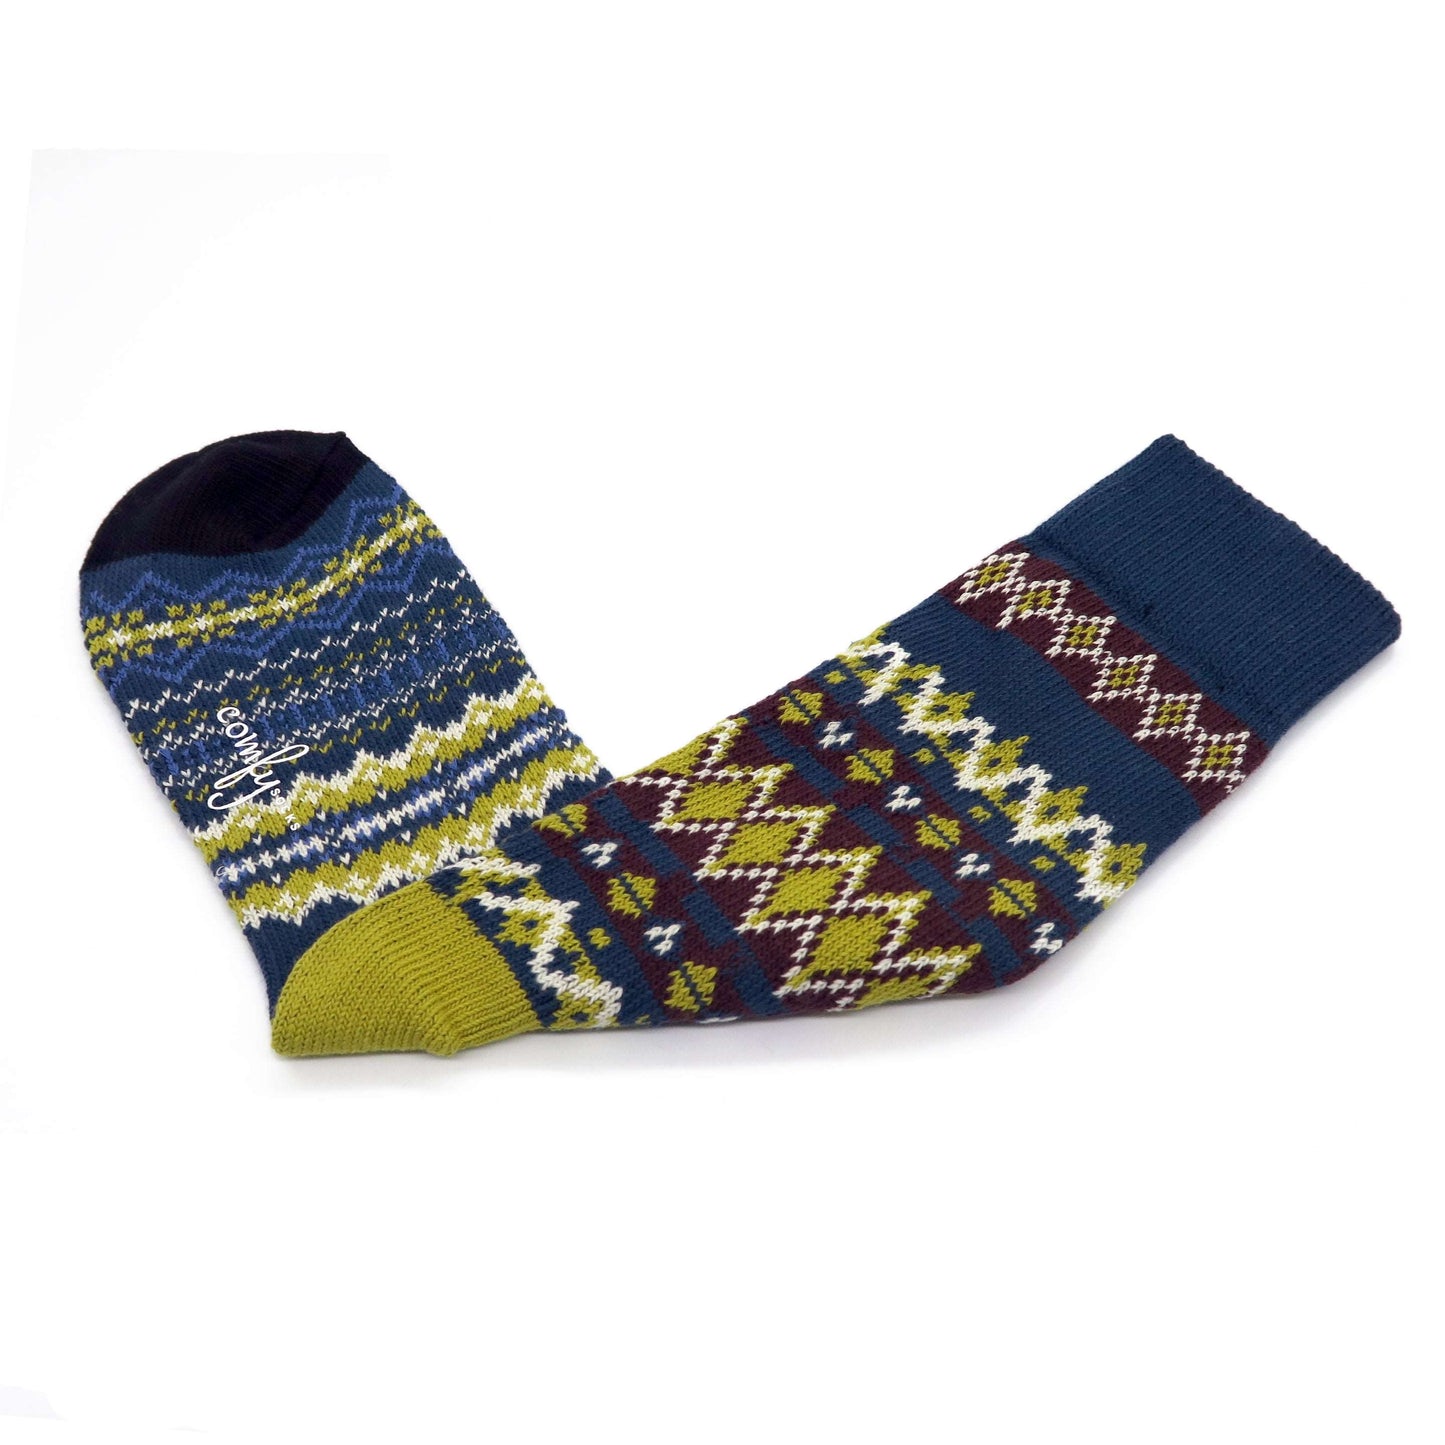 styrka sock - blue and yellow diamond pattern sock